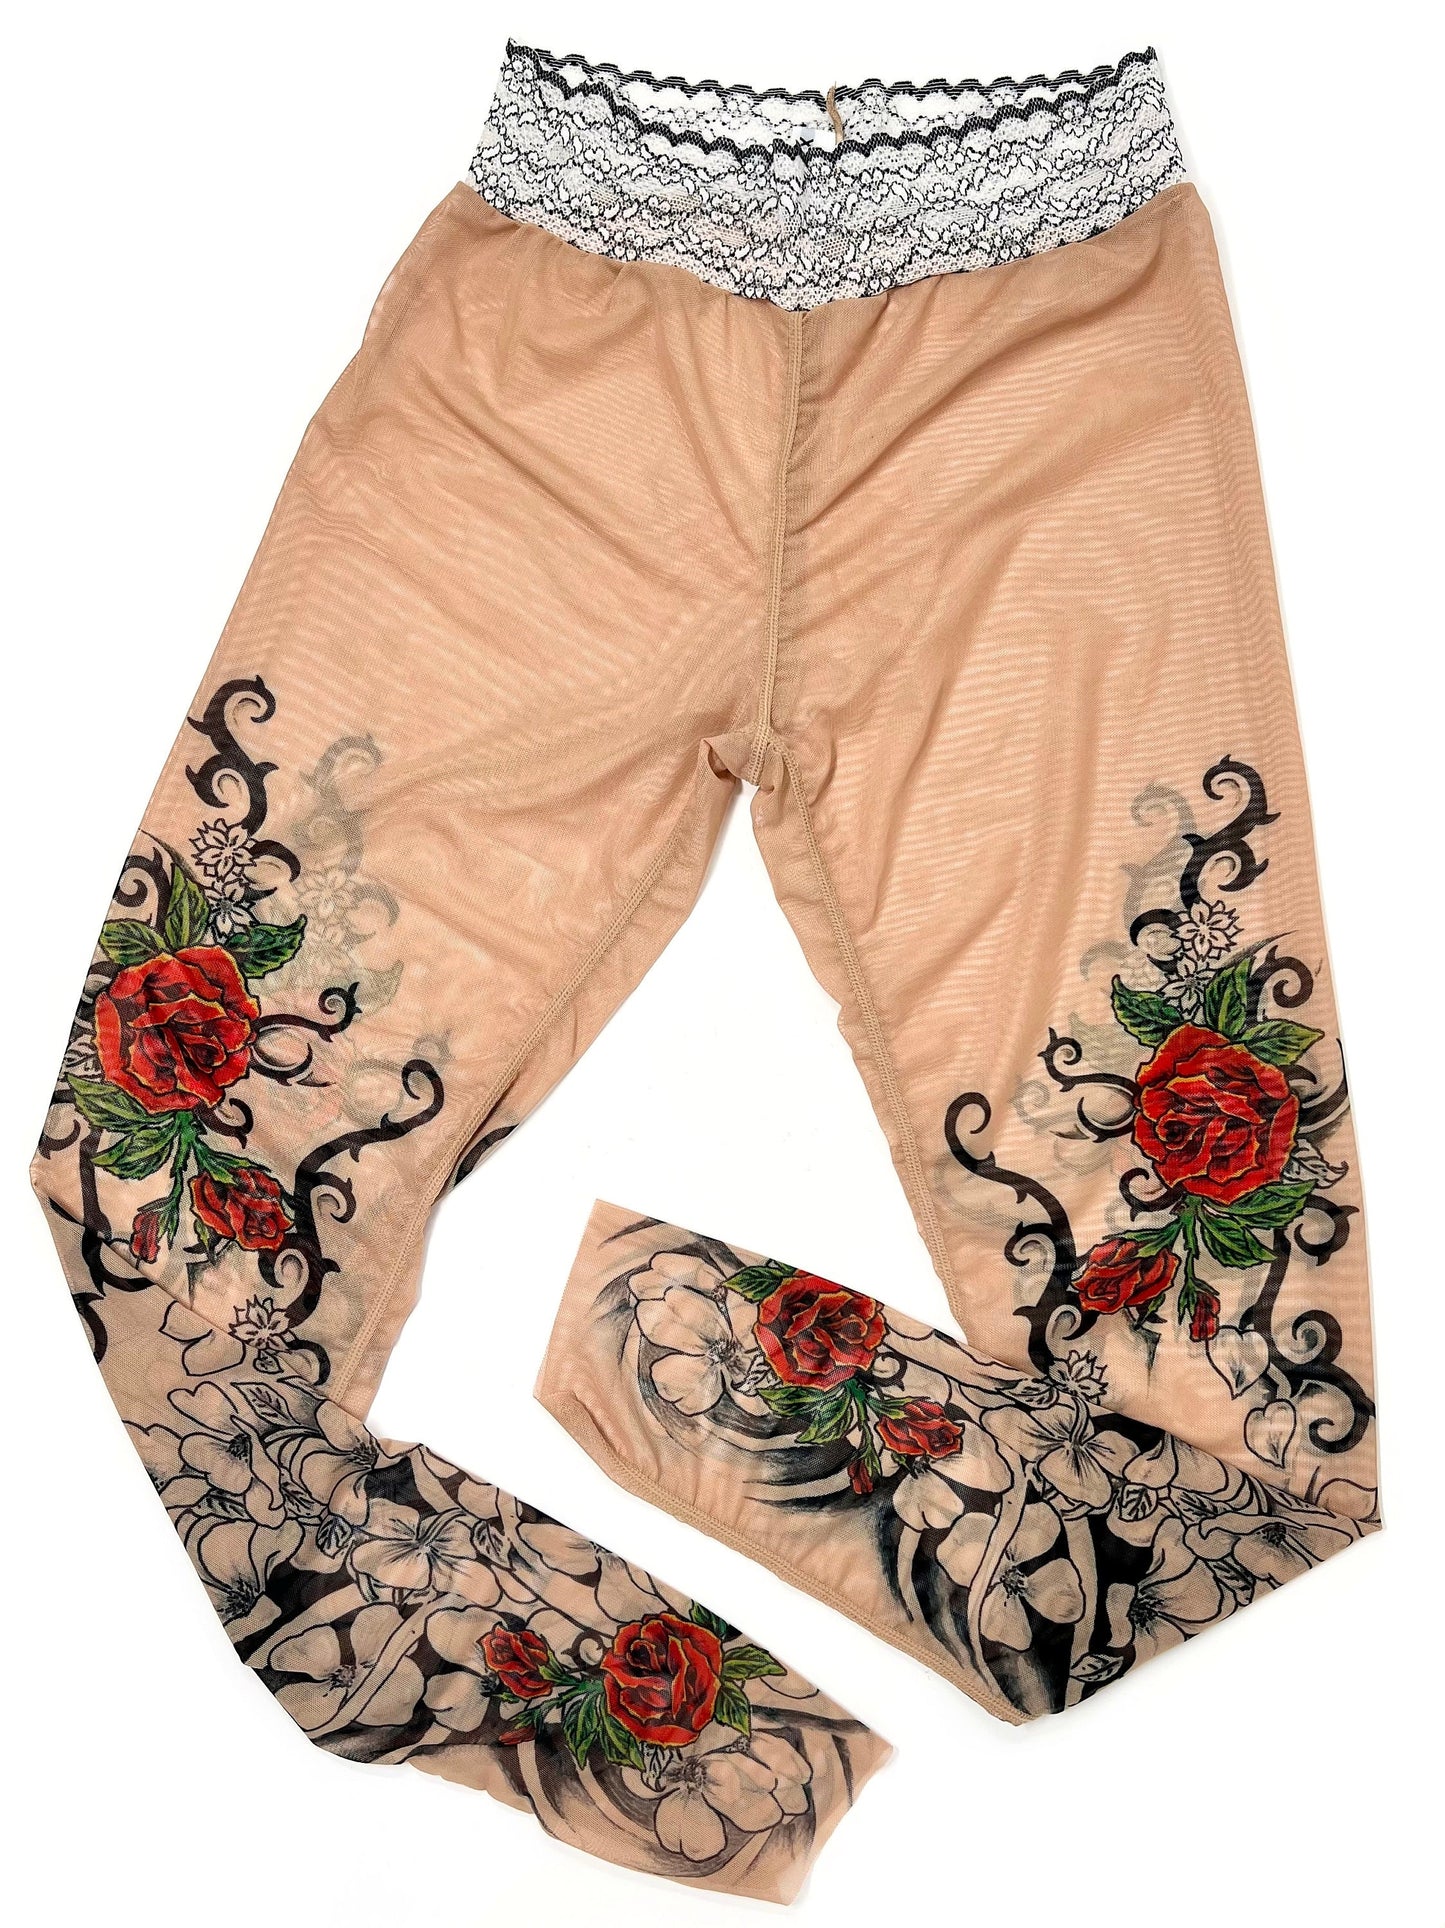 Flamenco Roses and Black Tribal Art Tattoo Leggings